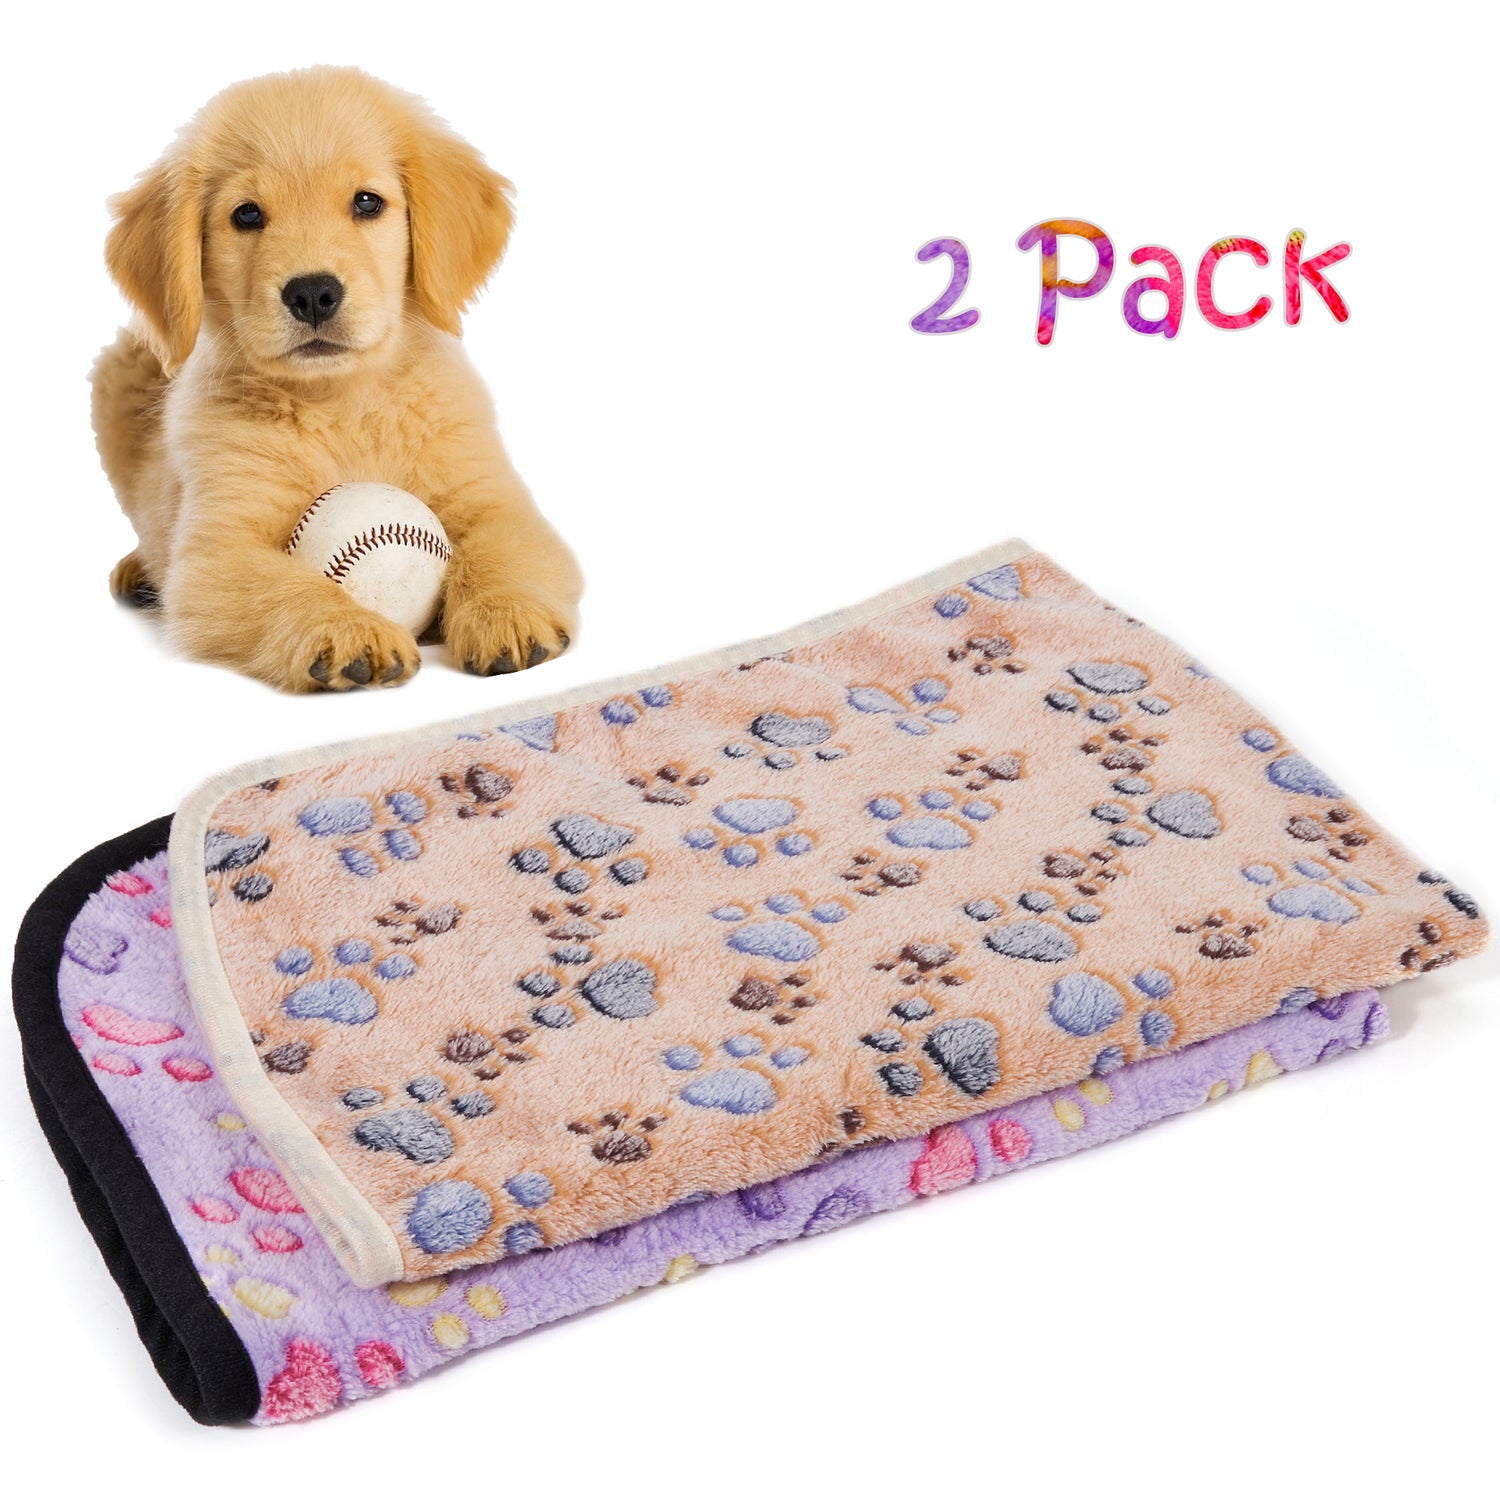 LUXMO 2 Pack Cat Dog Puppy Blanket Soft Pet Bed Cushion Warm Sleep Mat